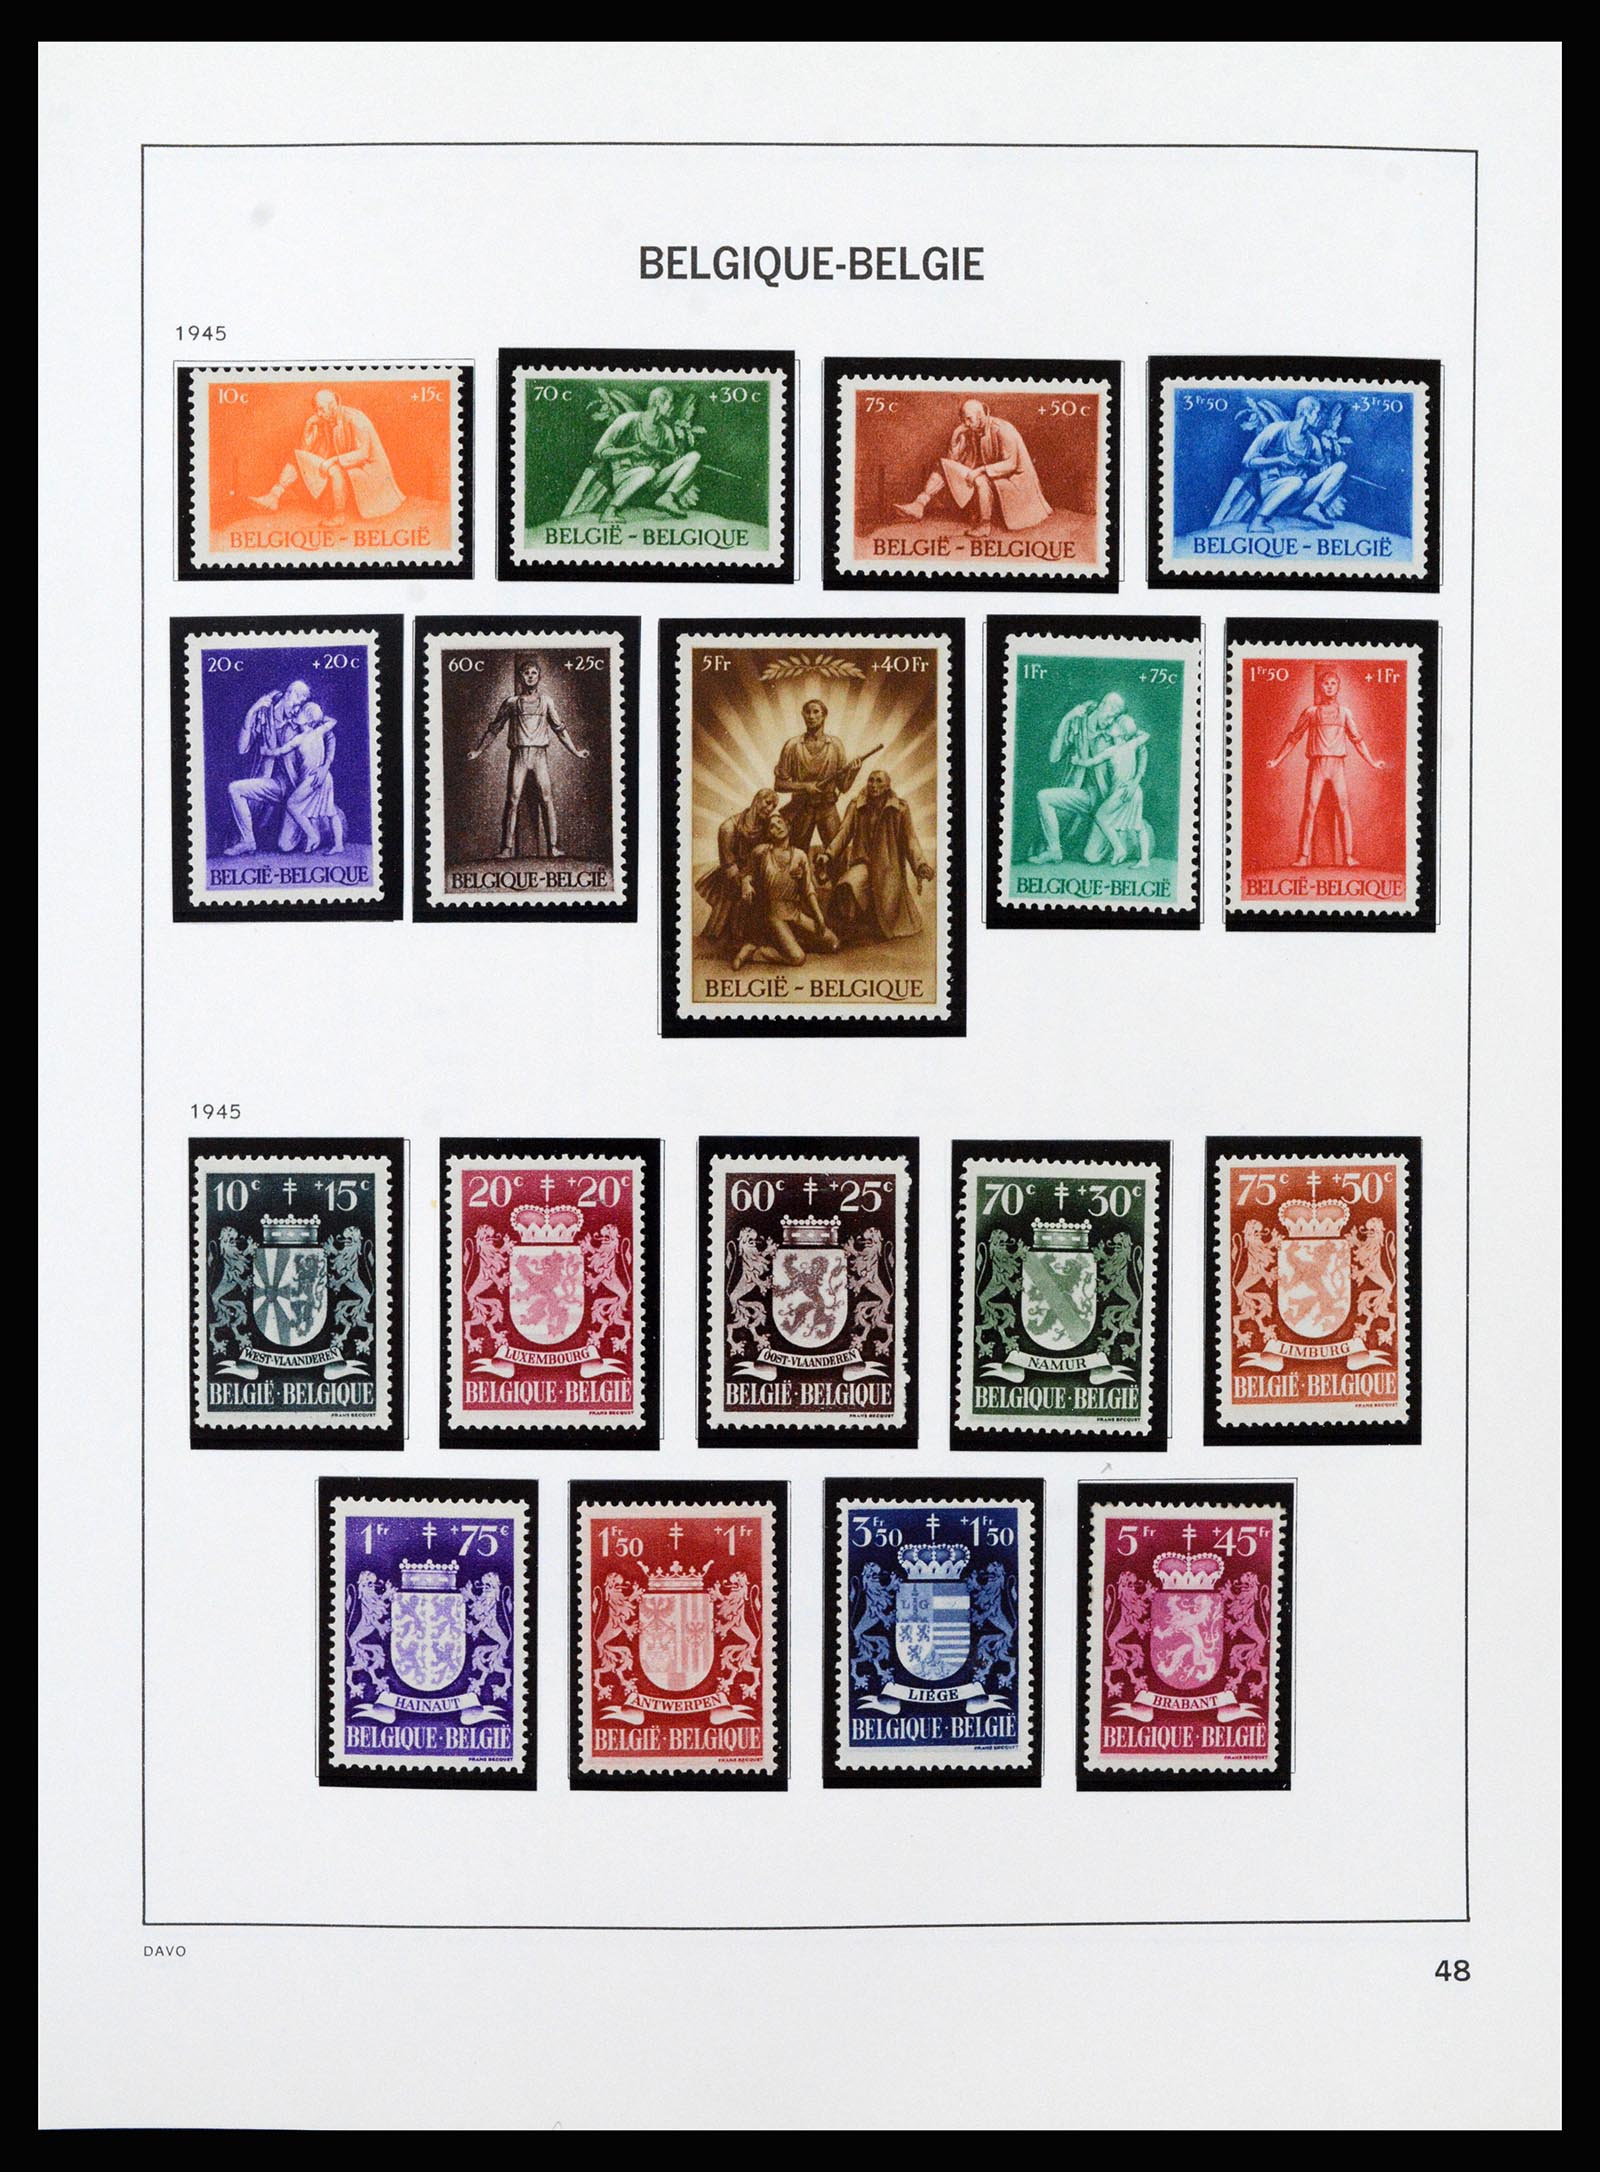 37189 050 - Stamp collection 37189 Belgium 1849-2006.